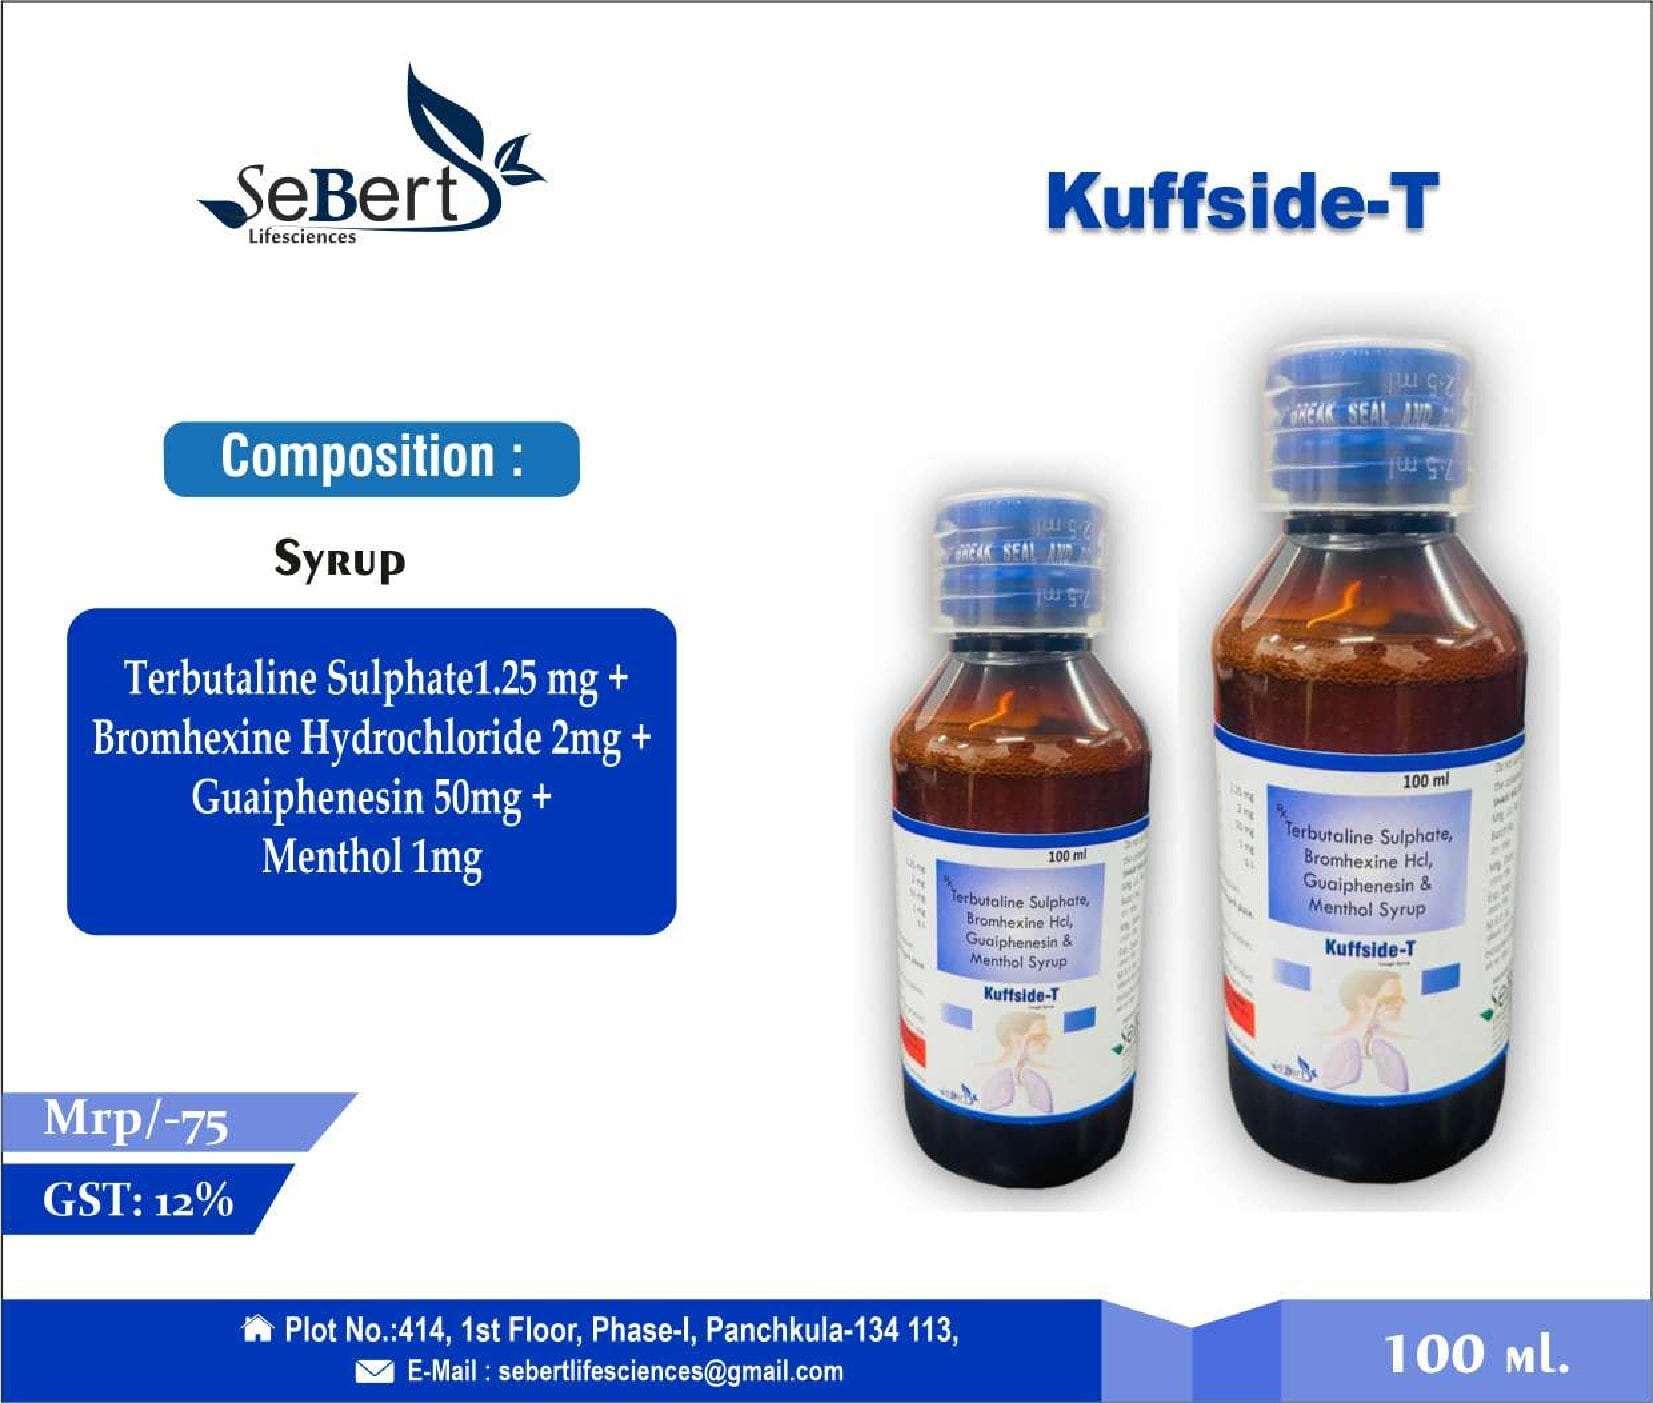 terbutaline sulphate1.25 mg + bromhexine hydrochloride 2mg + guaiphenesin 50mg + menthol 1mg